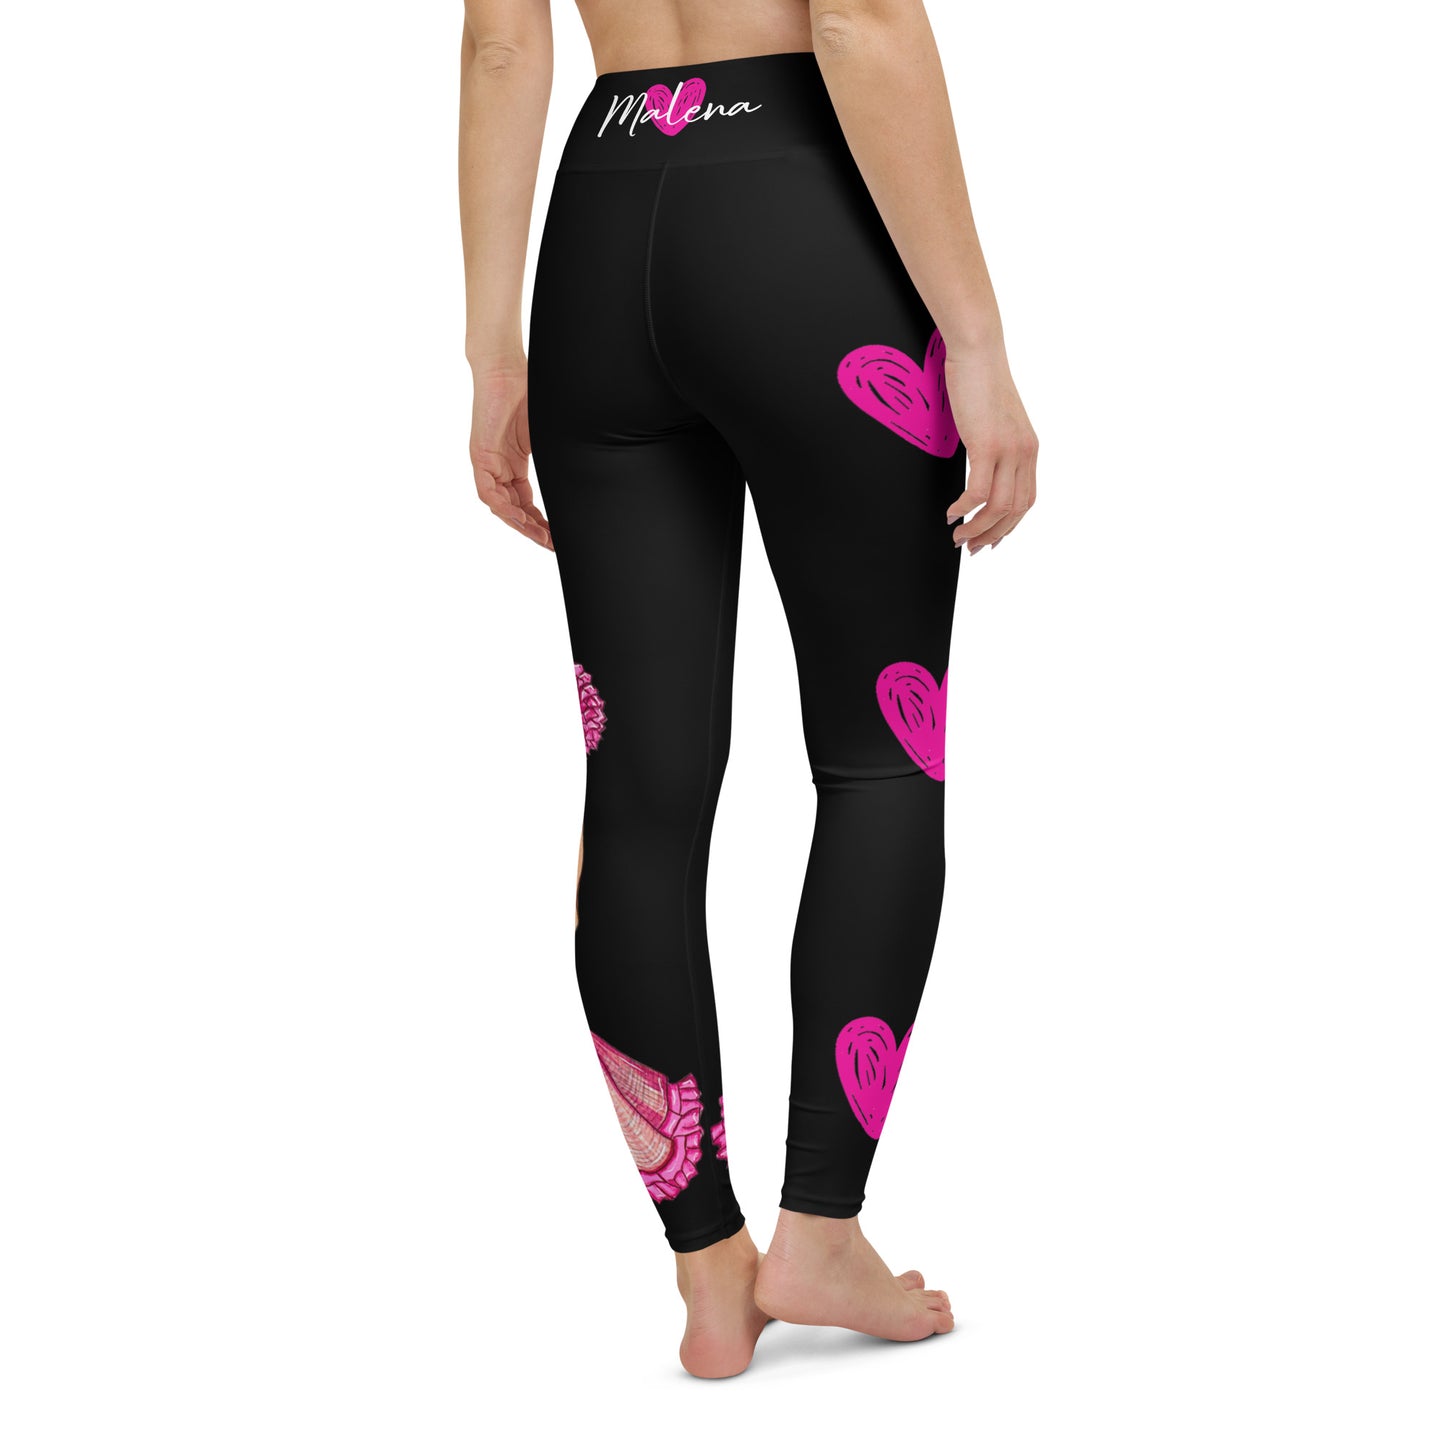 Flamenco Dancer Leggings, black high waisted yoga leggings with a pink dress and pink hearts design - IllustrArte